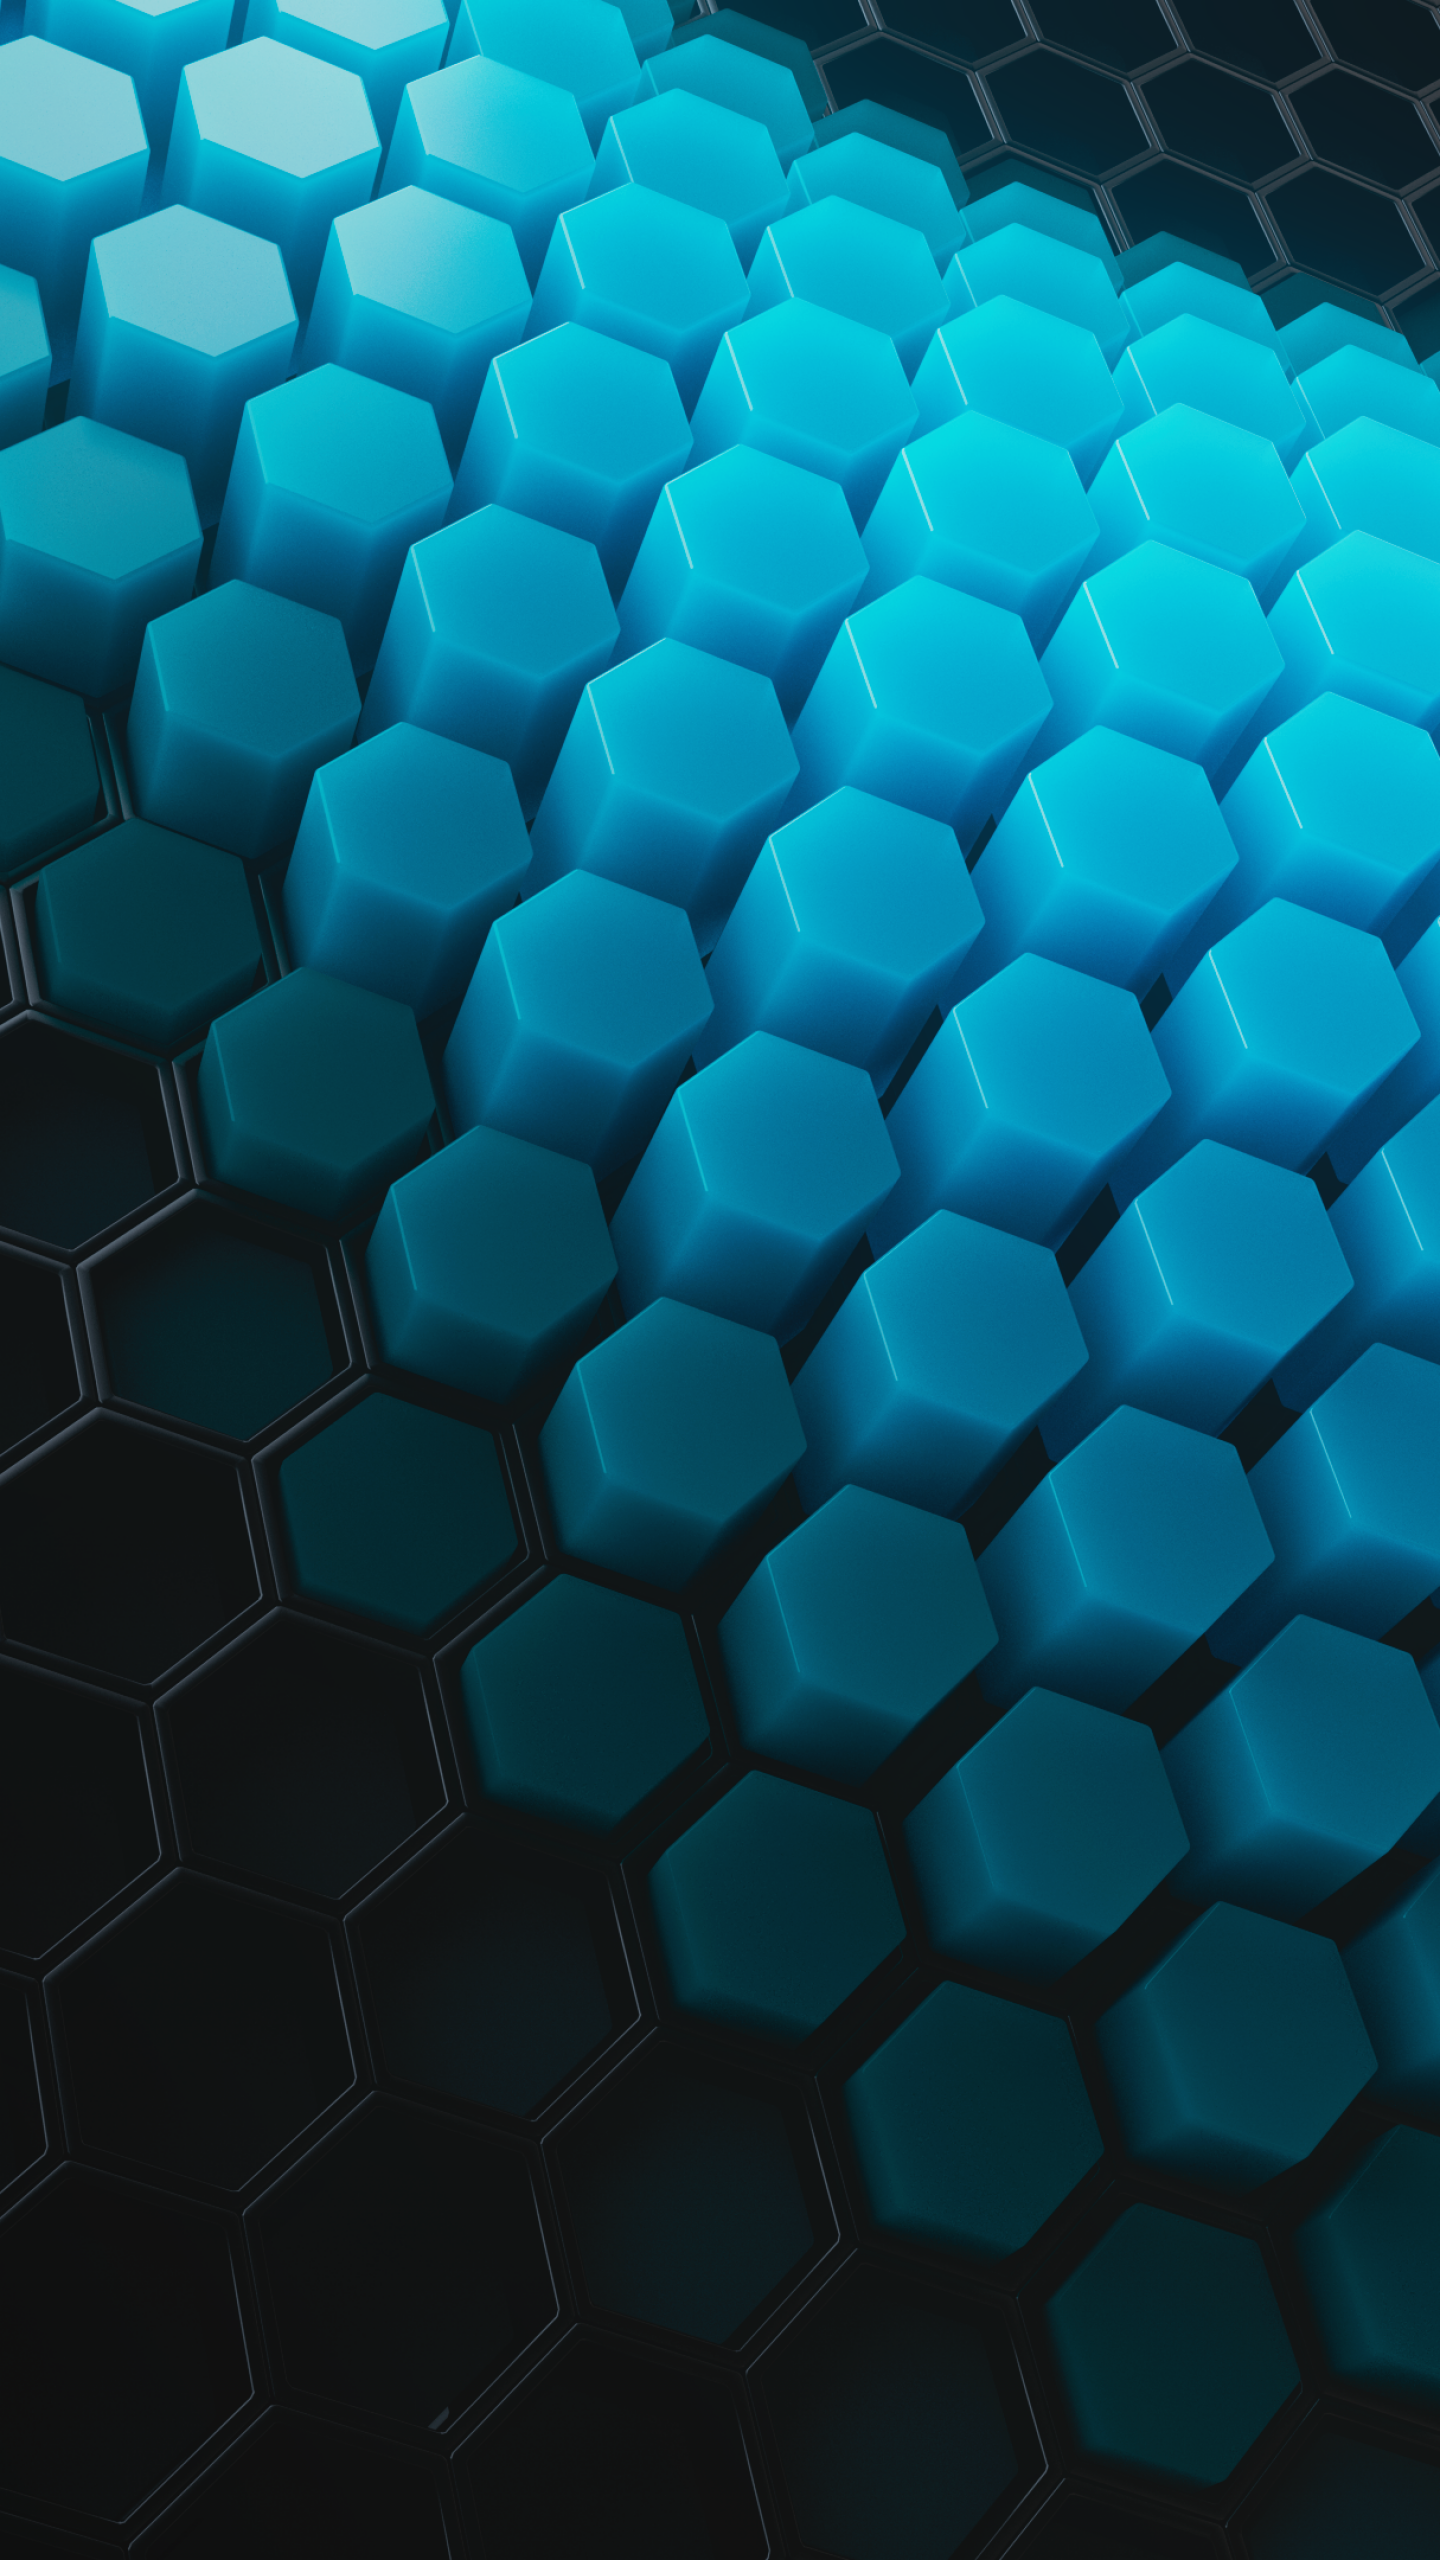 Hexagons Wallpaper 4K, Patterns, Cyan background, Cyan blocks, Abstract